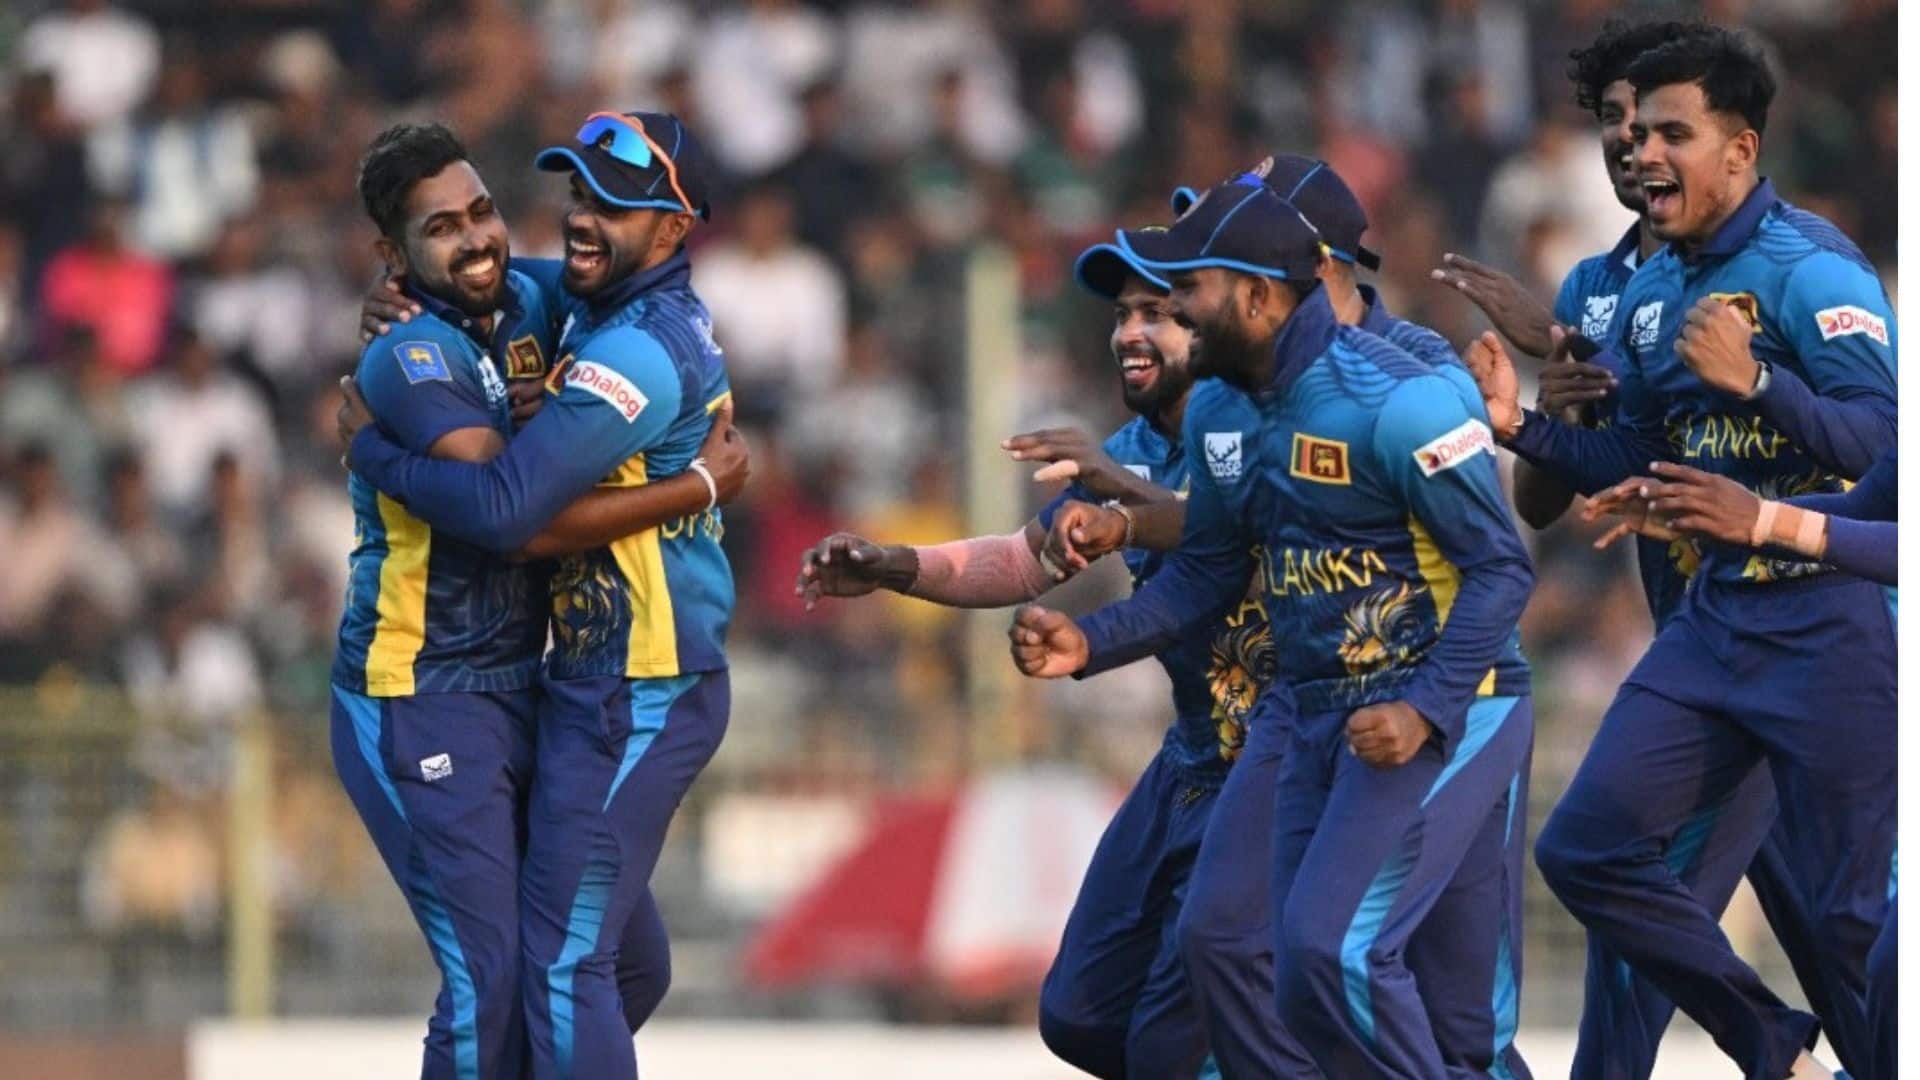 Sri Lankan players celebrating hat-trick (X.com)